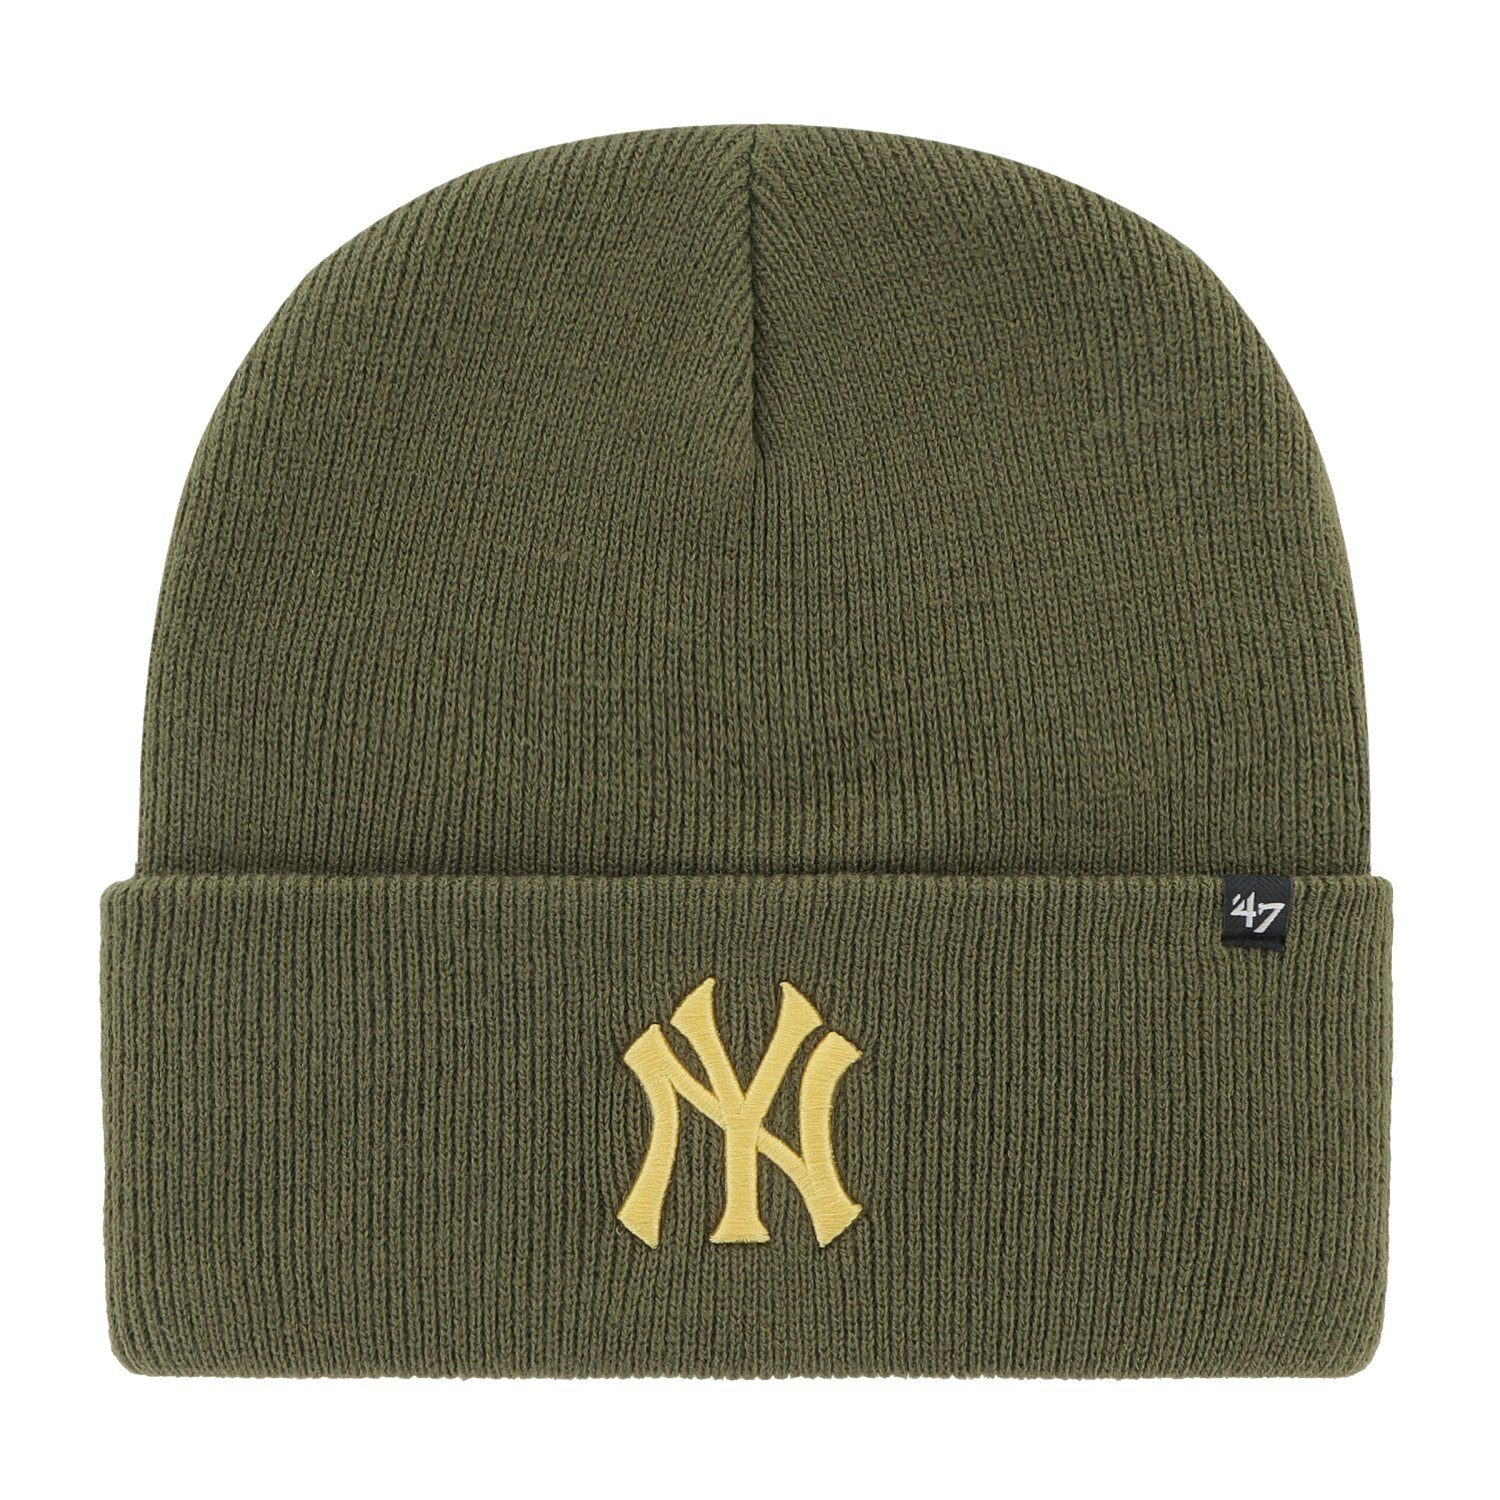 '47 Brand Fleecemütze Beanie HAYMAKER NY Yankees